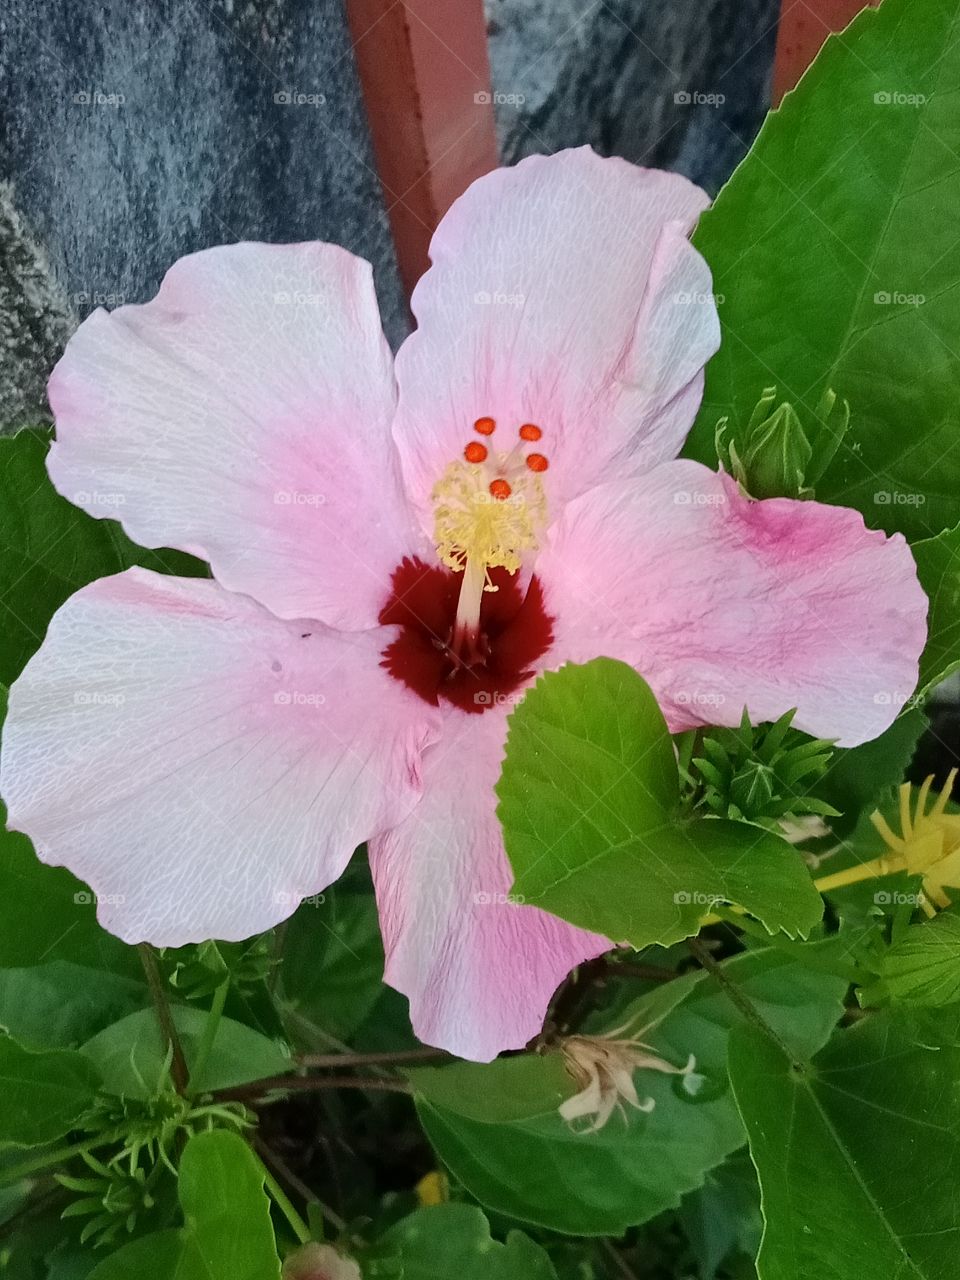 🌸 blossom flower 🌸